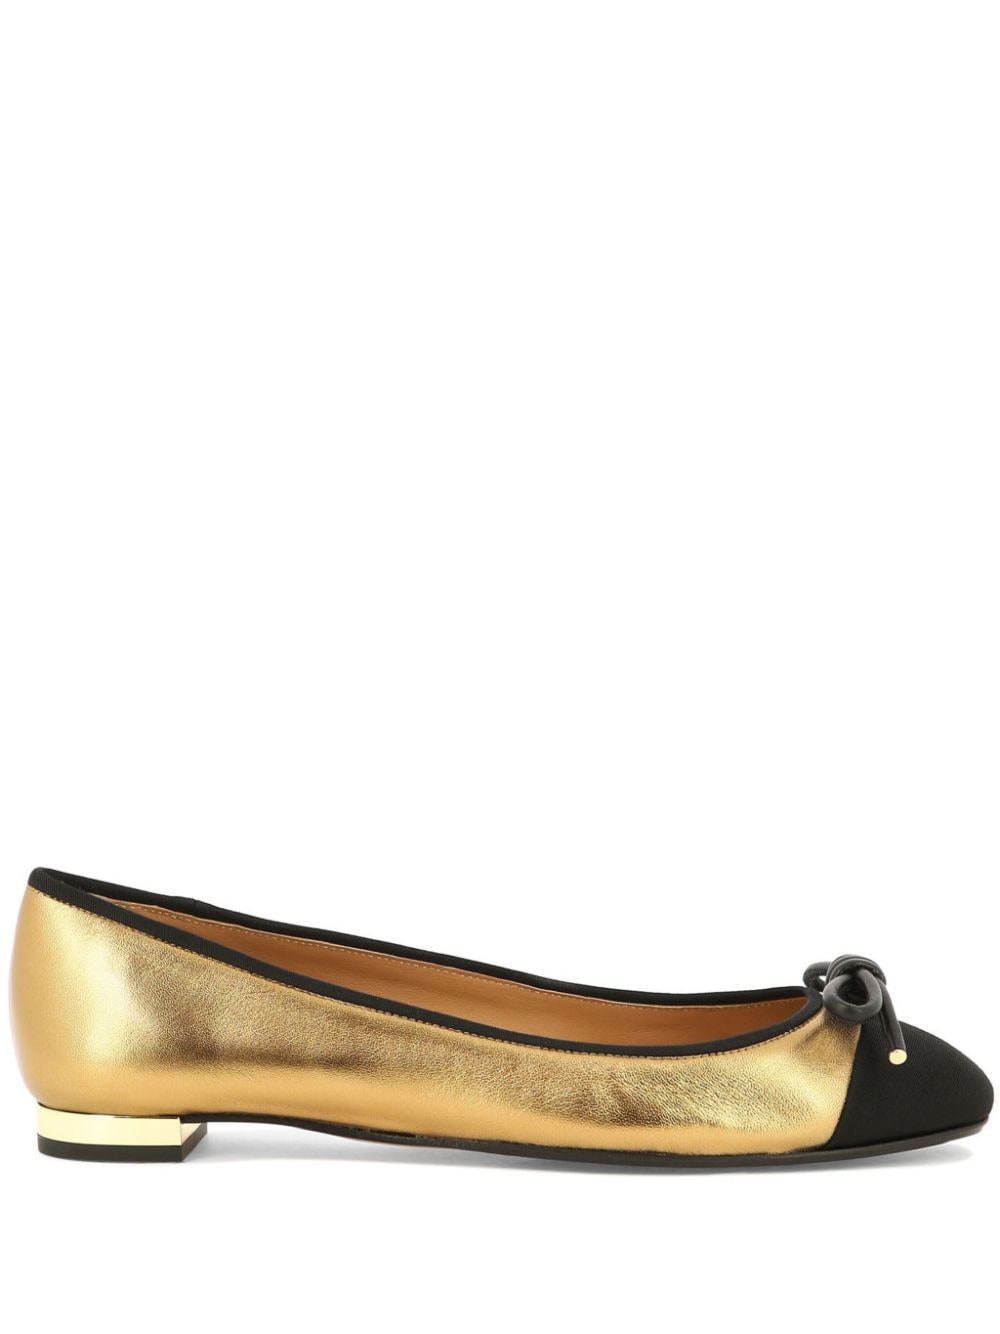 Aquazzura Parisina leather ballerina shoes Gold